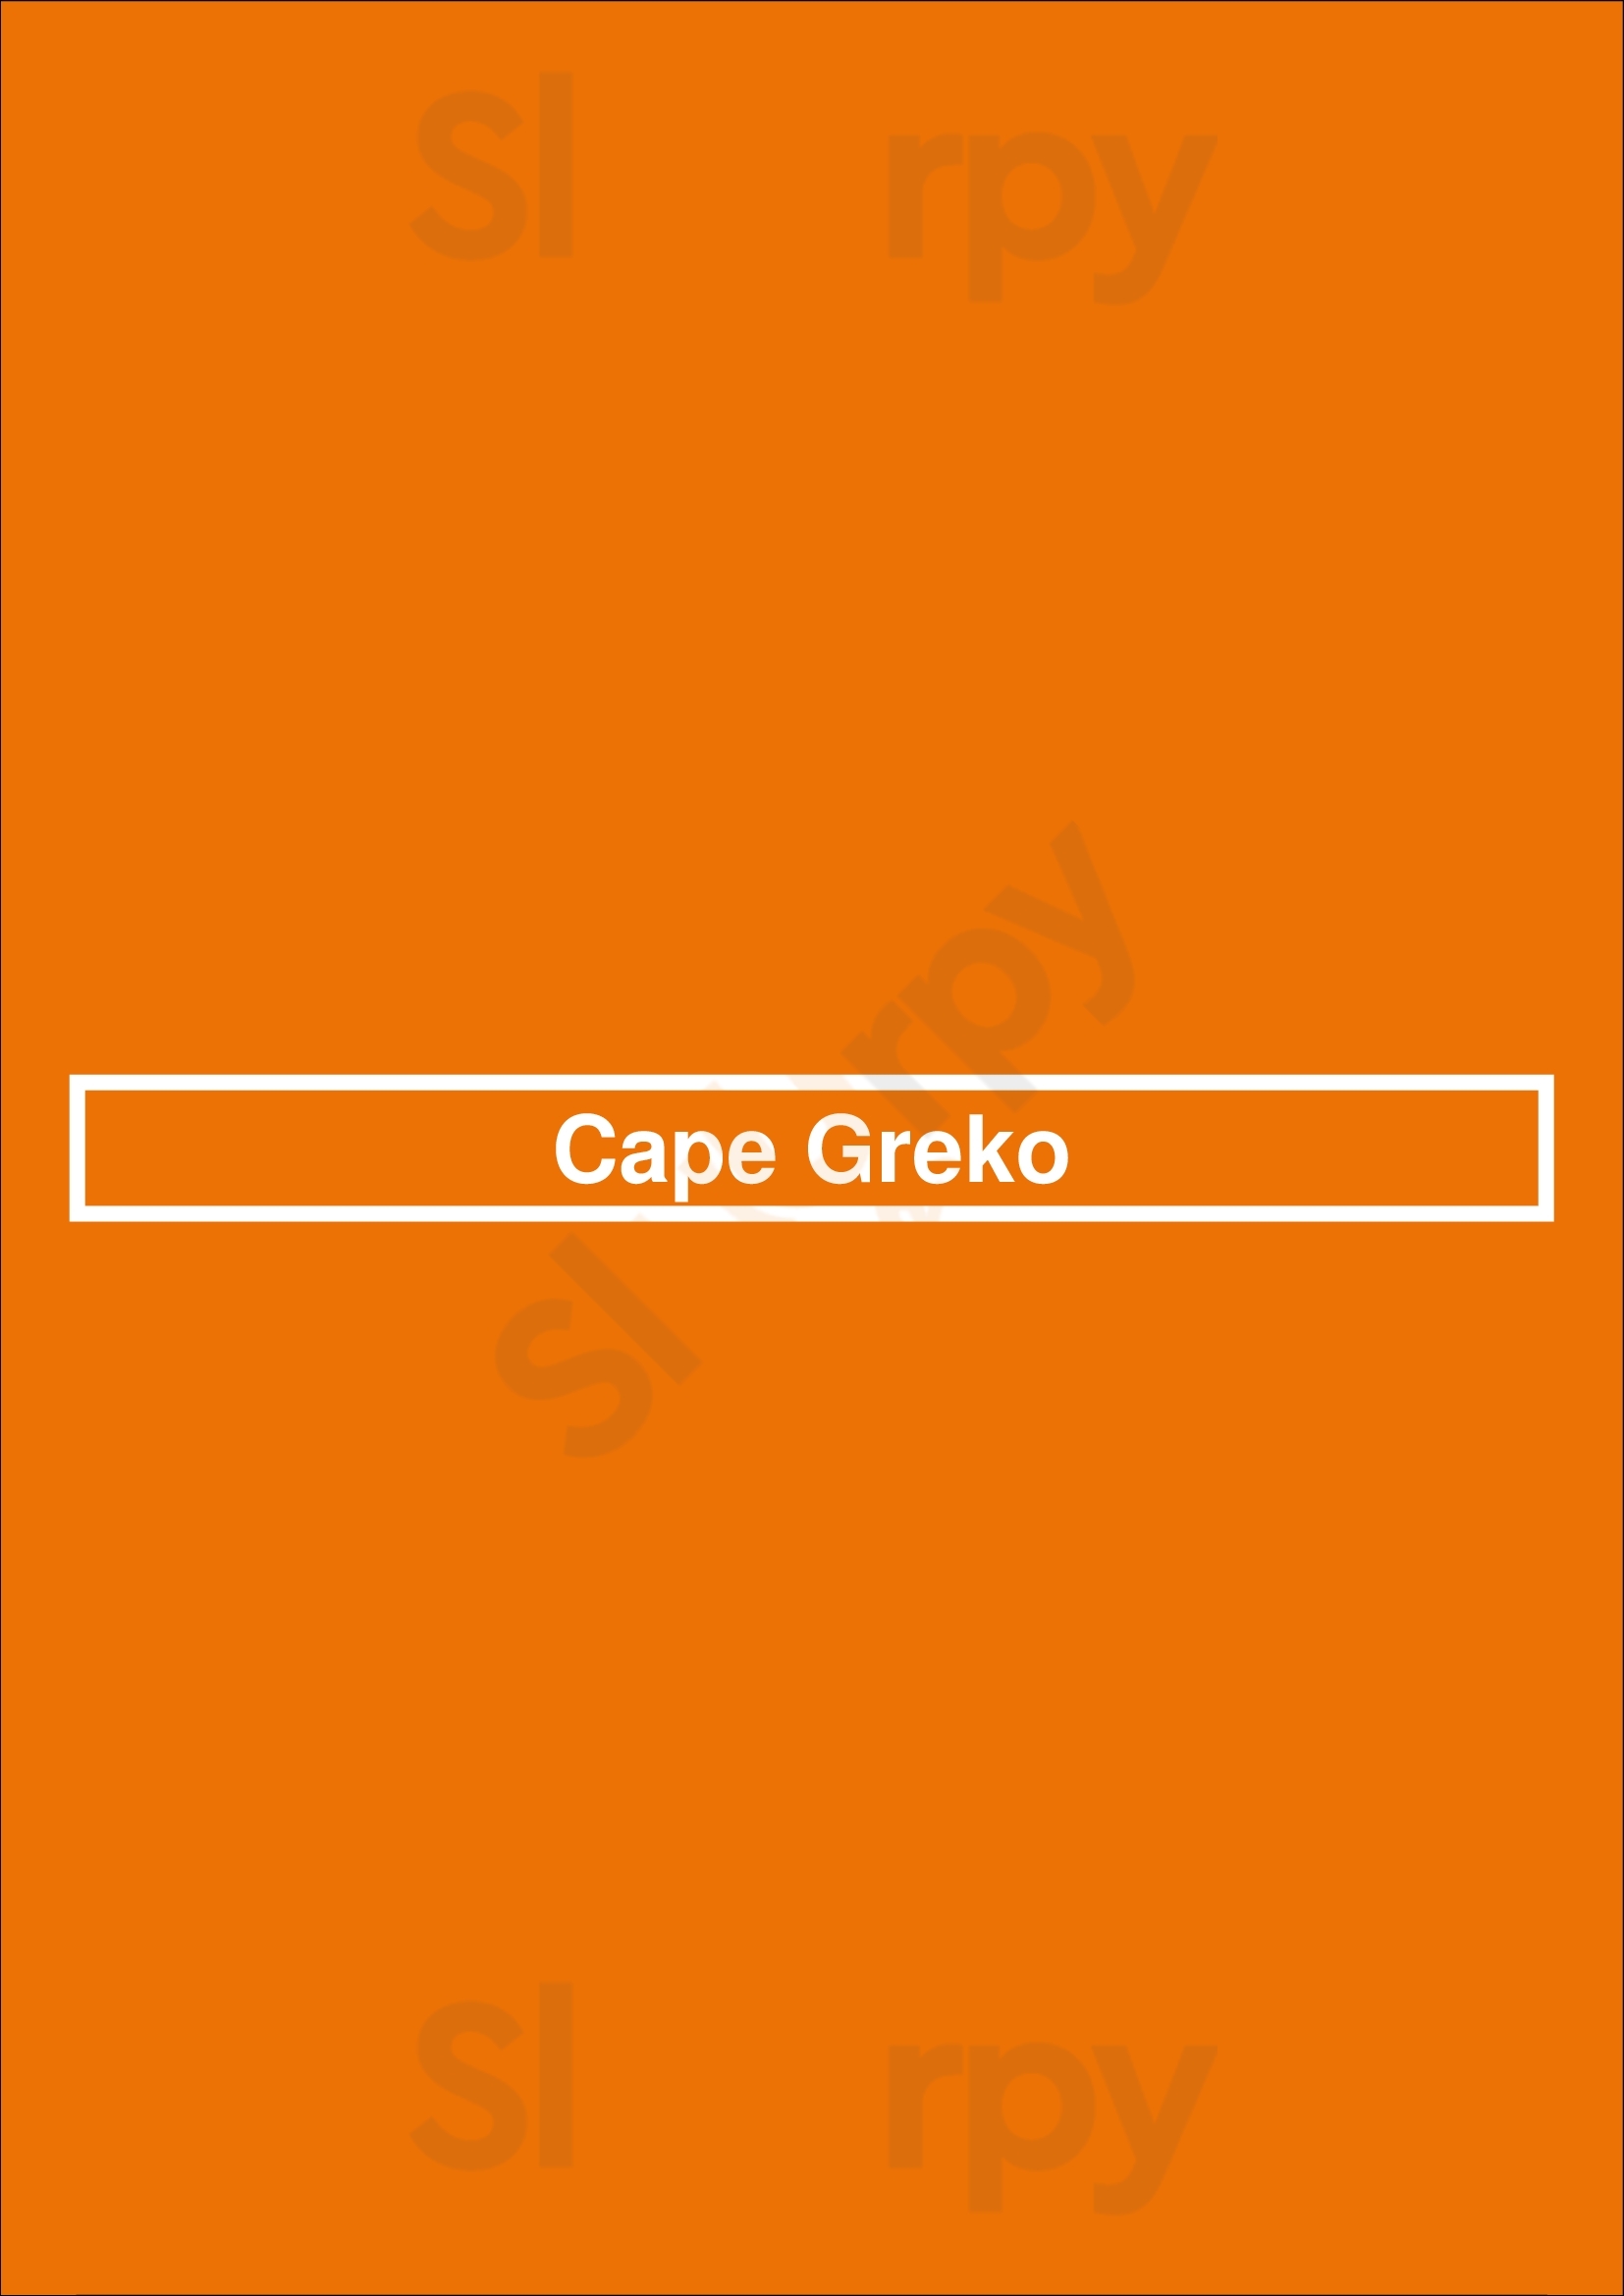 Cape Greko Malahide Menu - 1